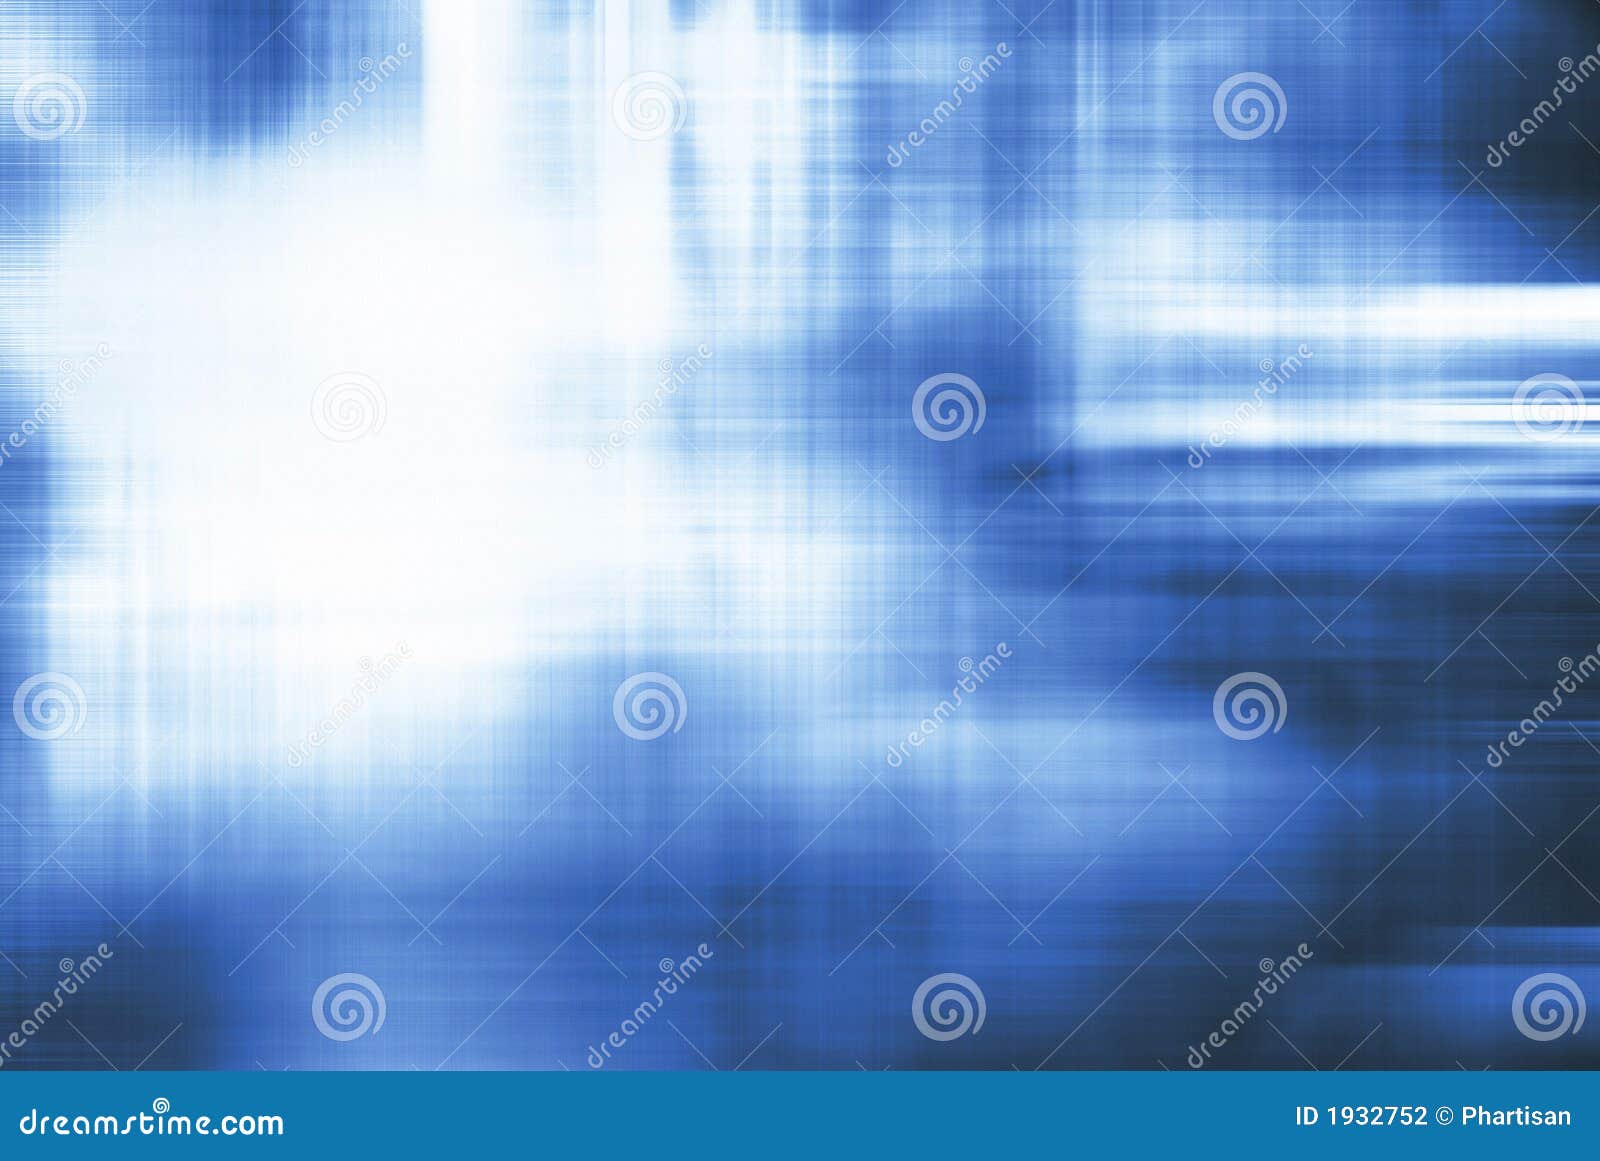 Navy Blue Multi Layered Background Stock Photo - Image of design ...